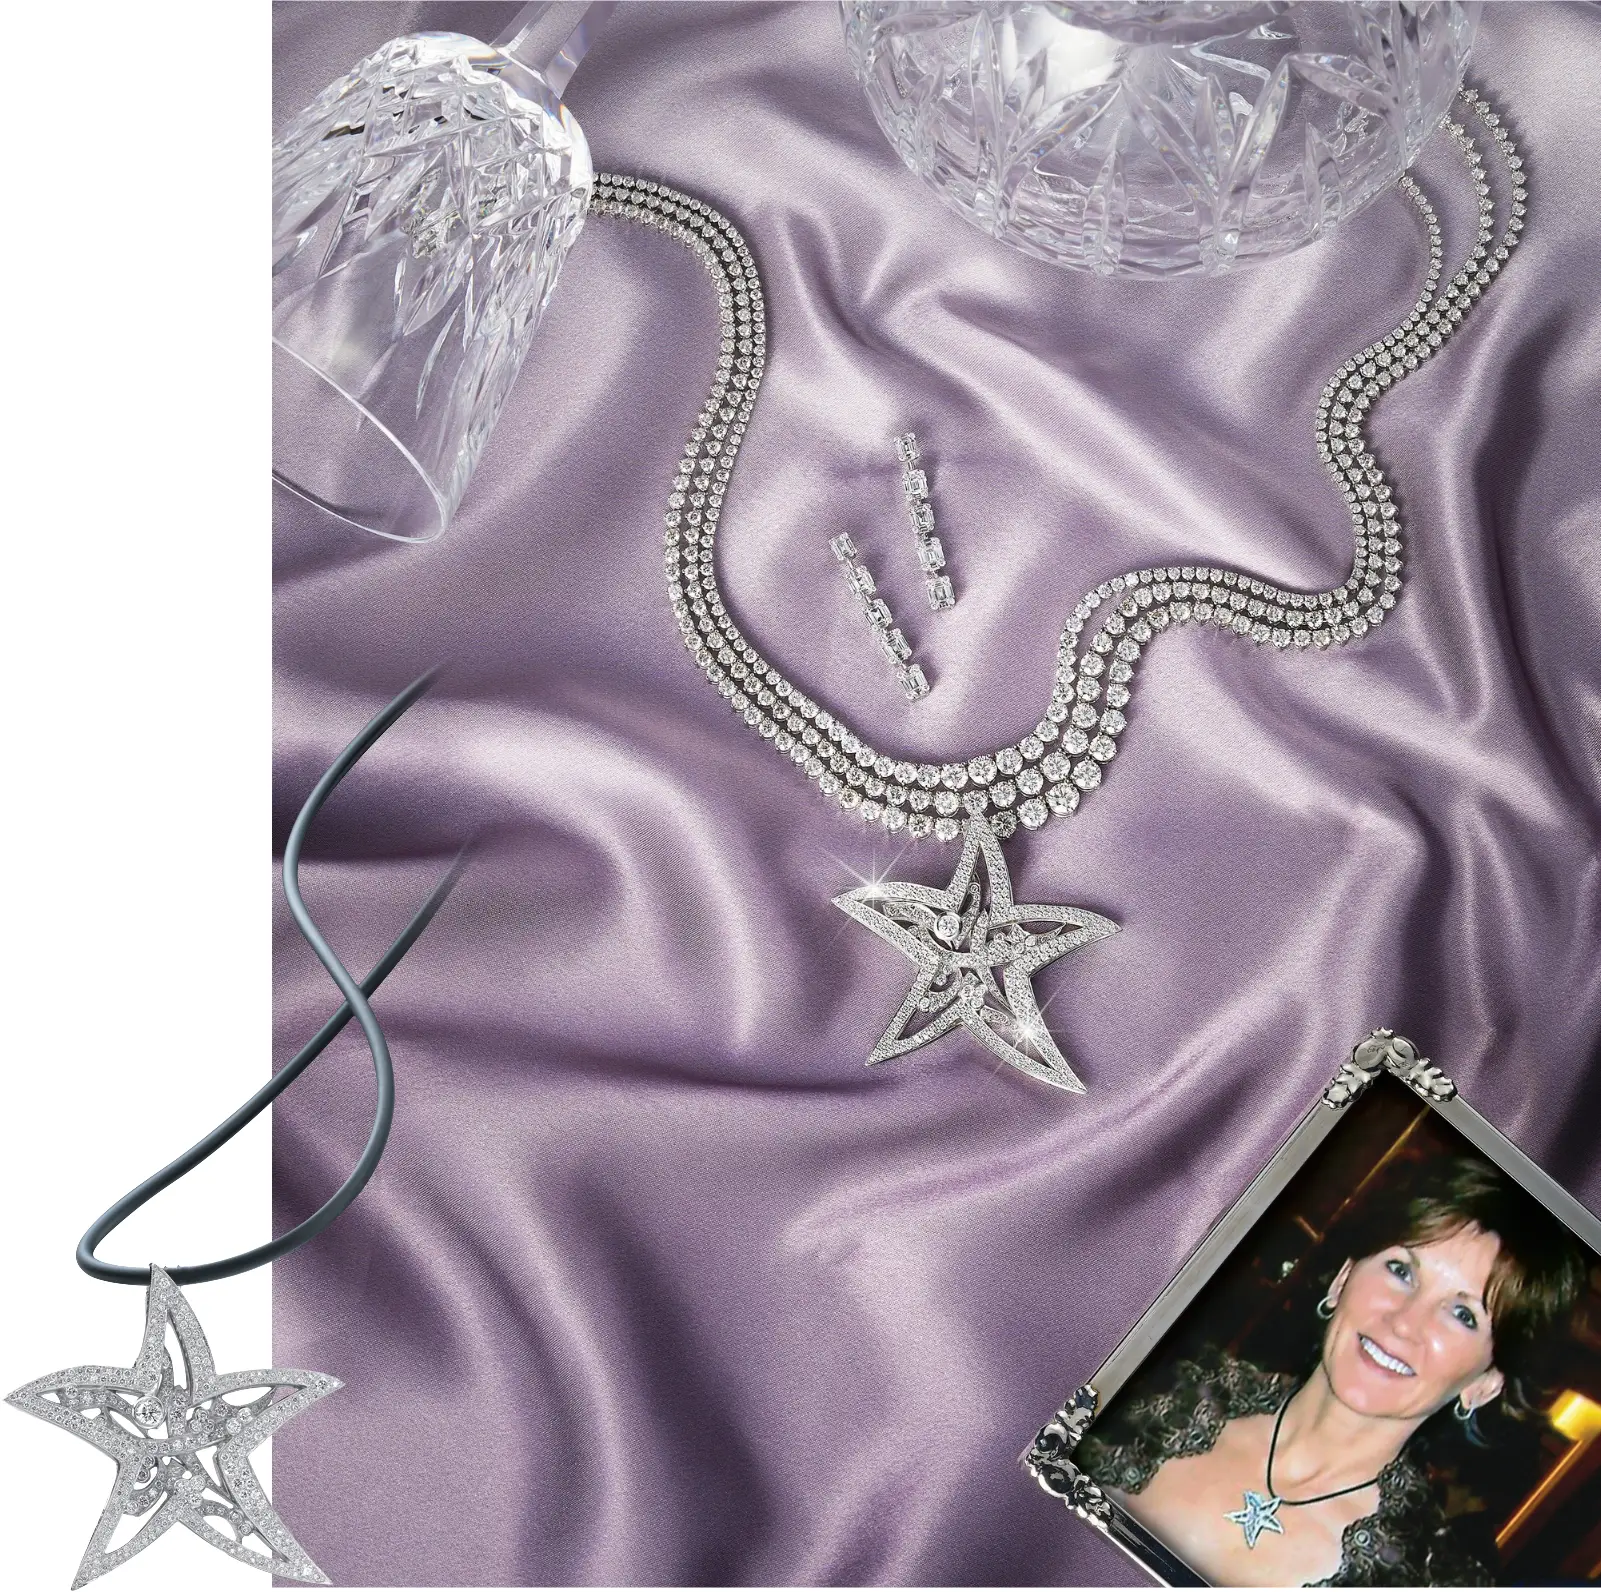 Julia's custom star necklace